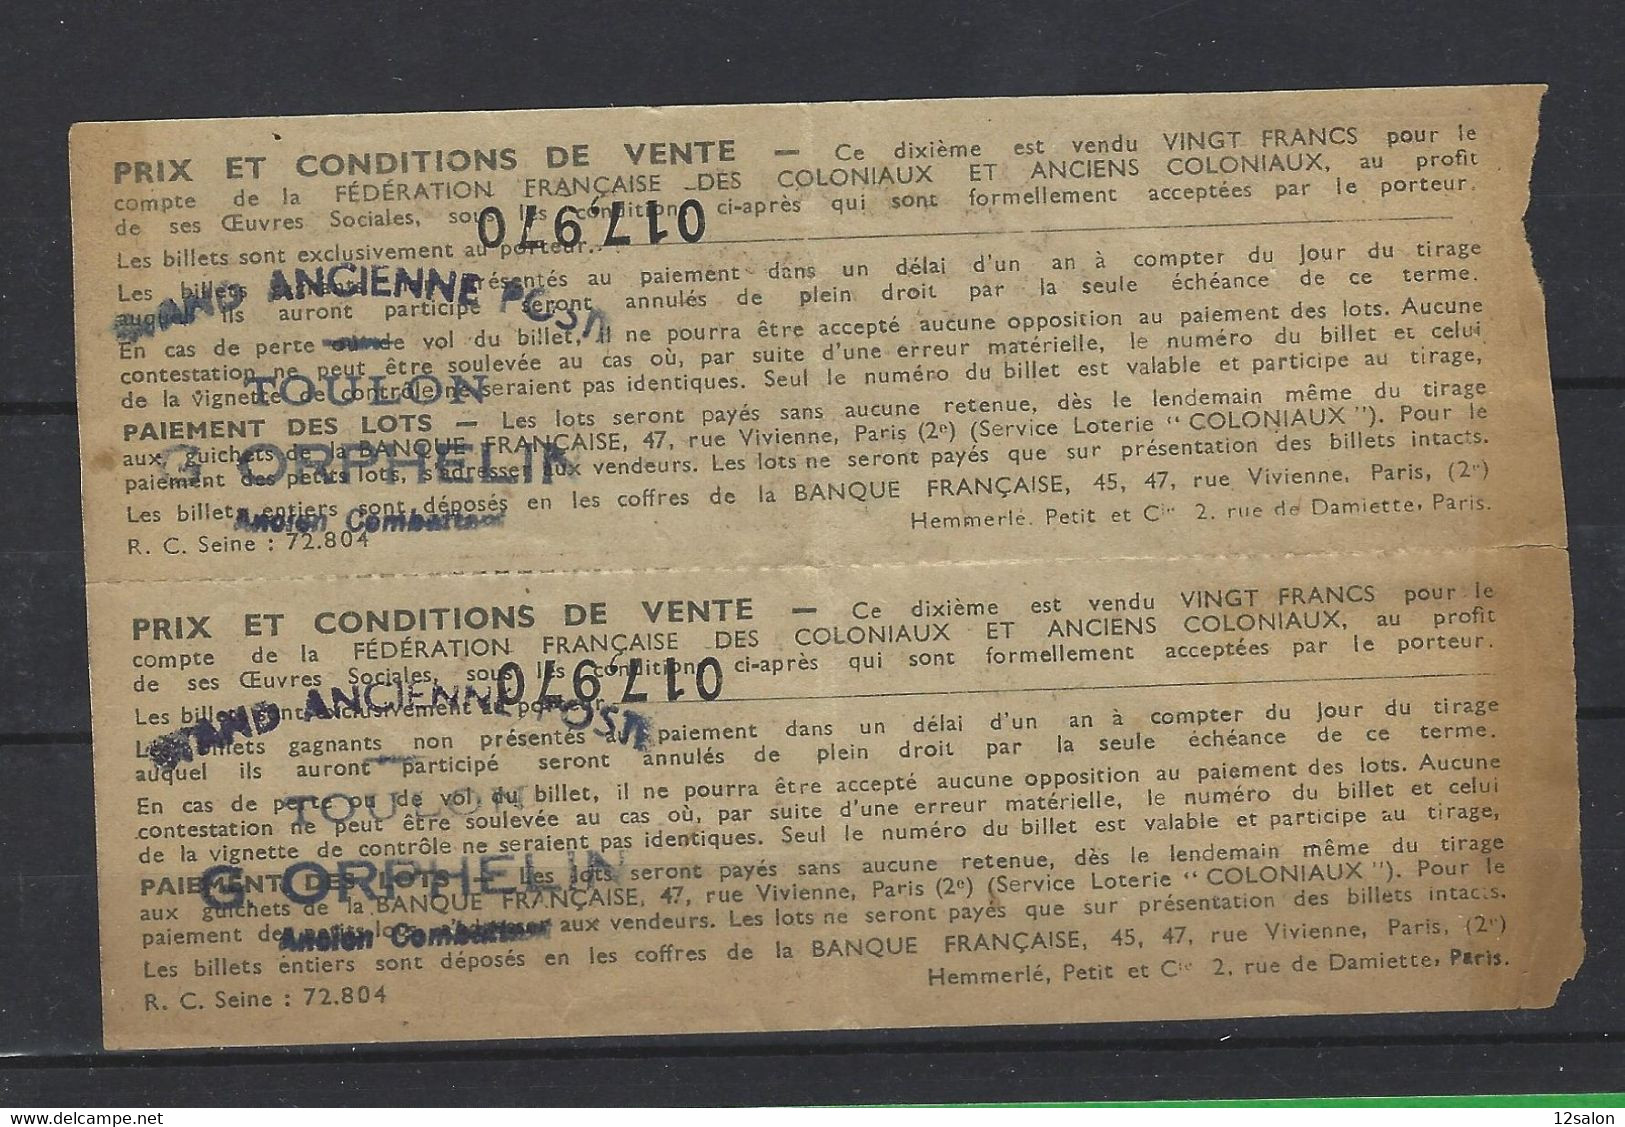 FRANCE LOTERIE NATIONALE LES COLONIAUX 1945 - Loterijbiljetten